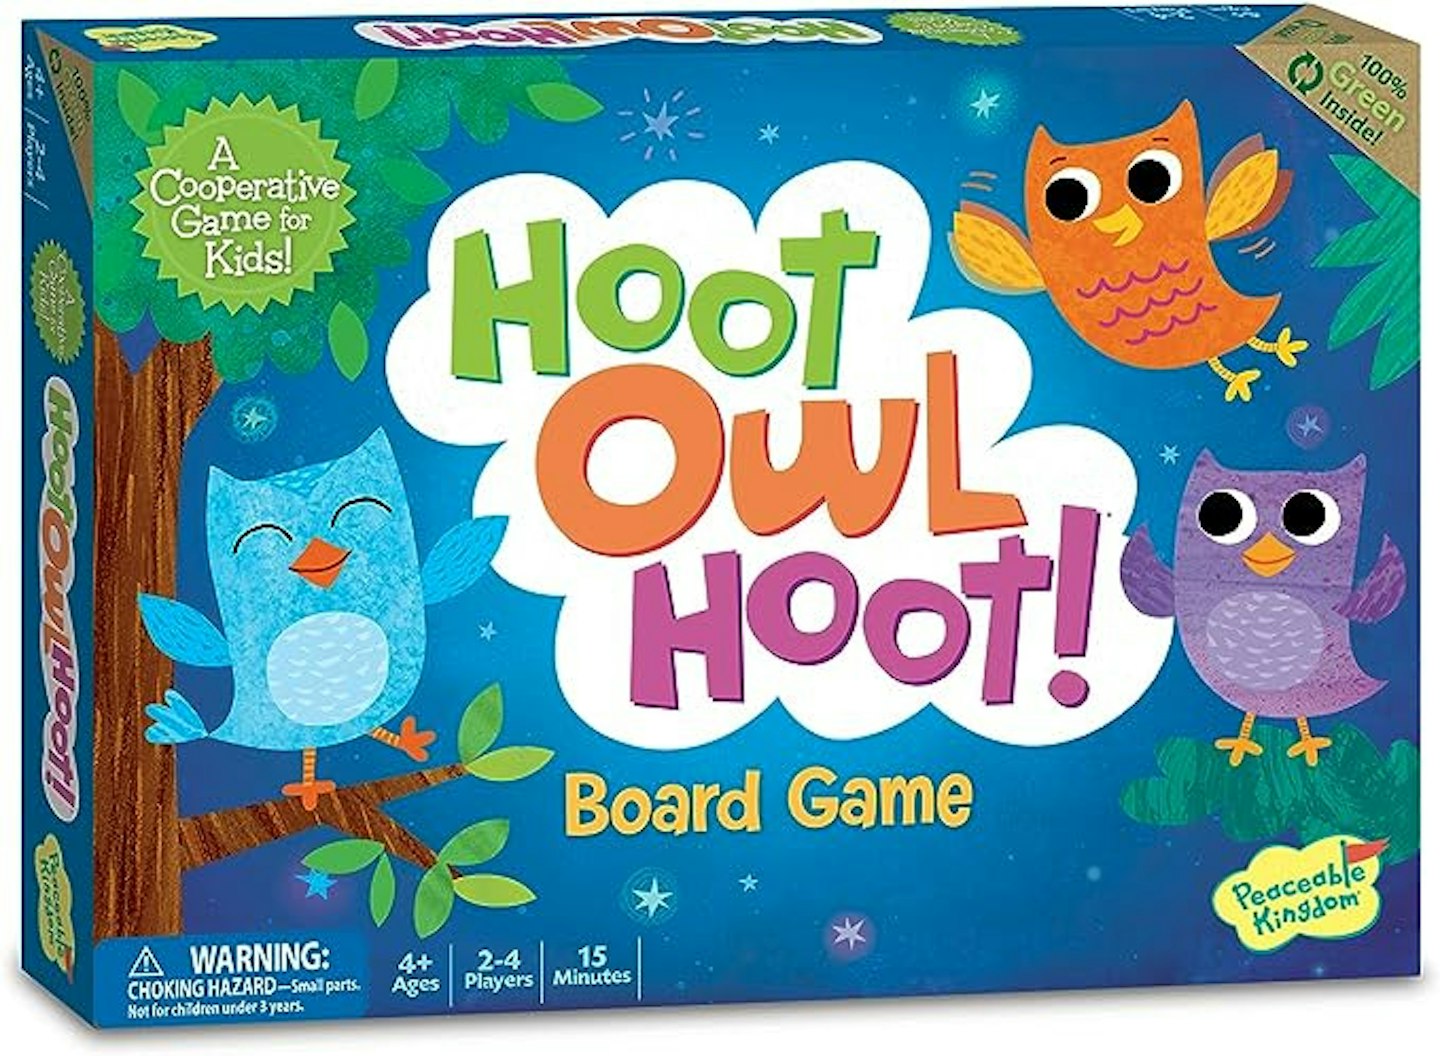 Hoot Owl Hoot! board game box